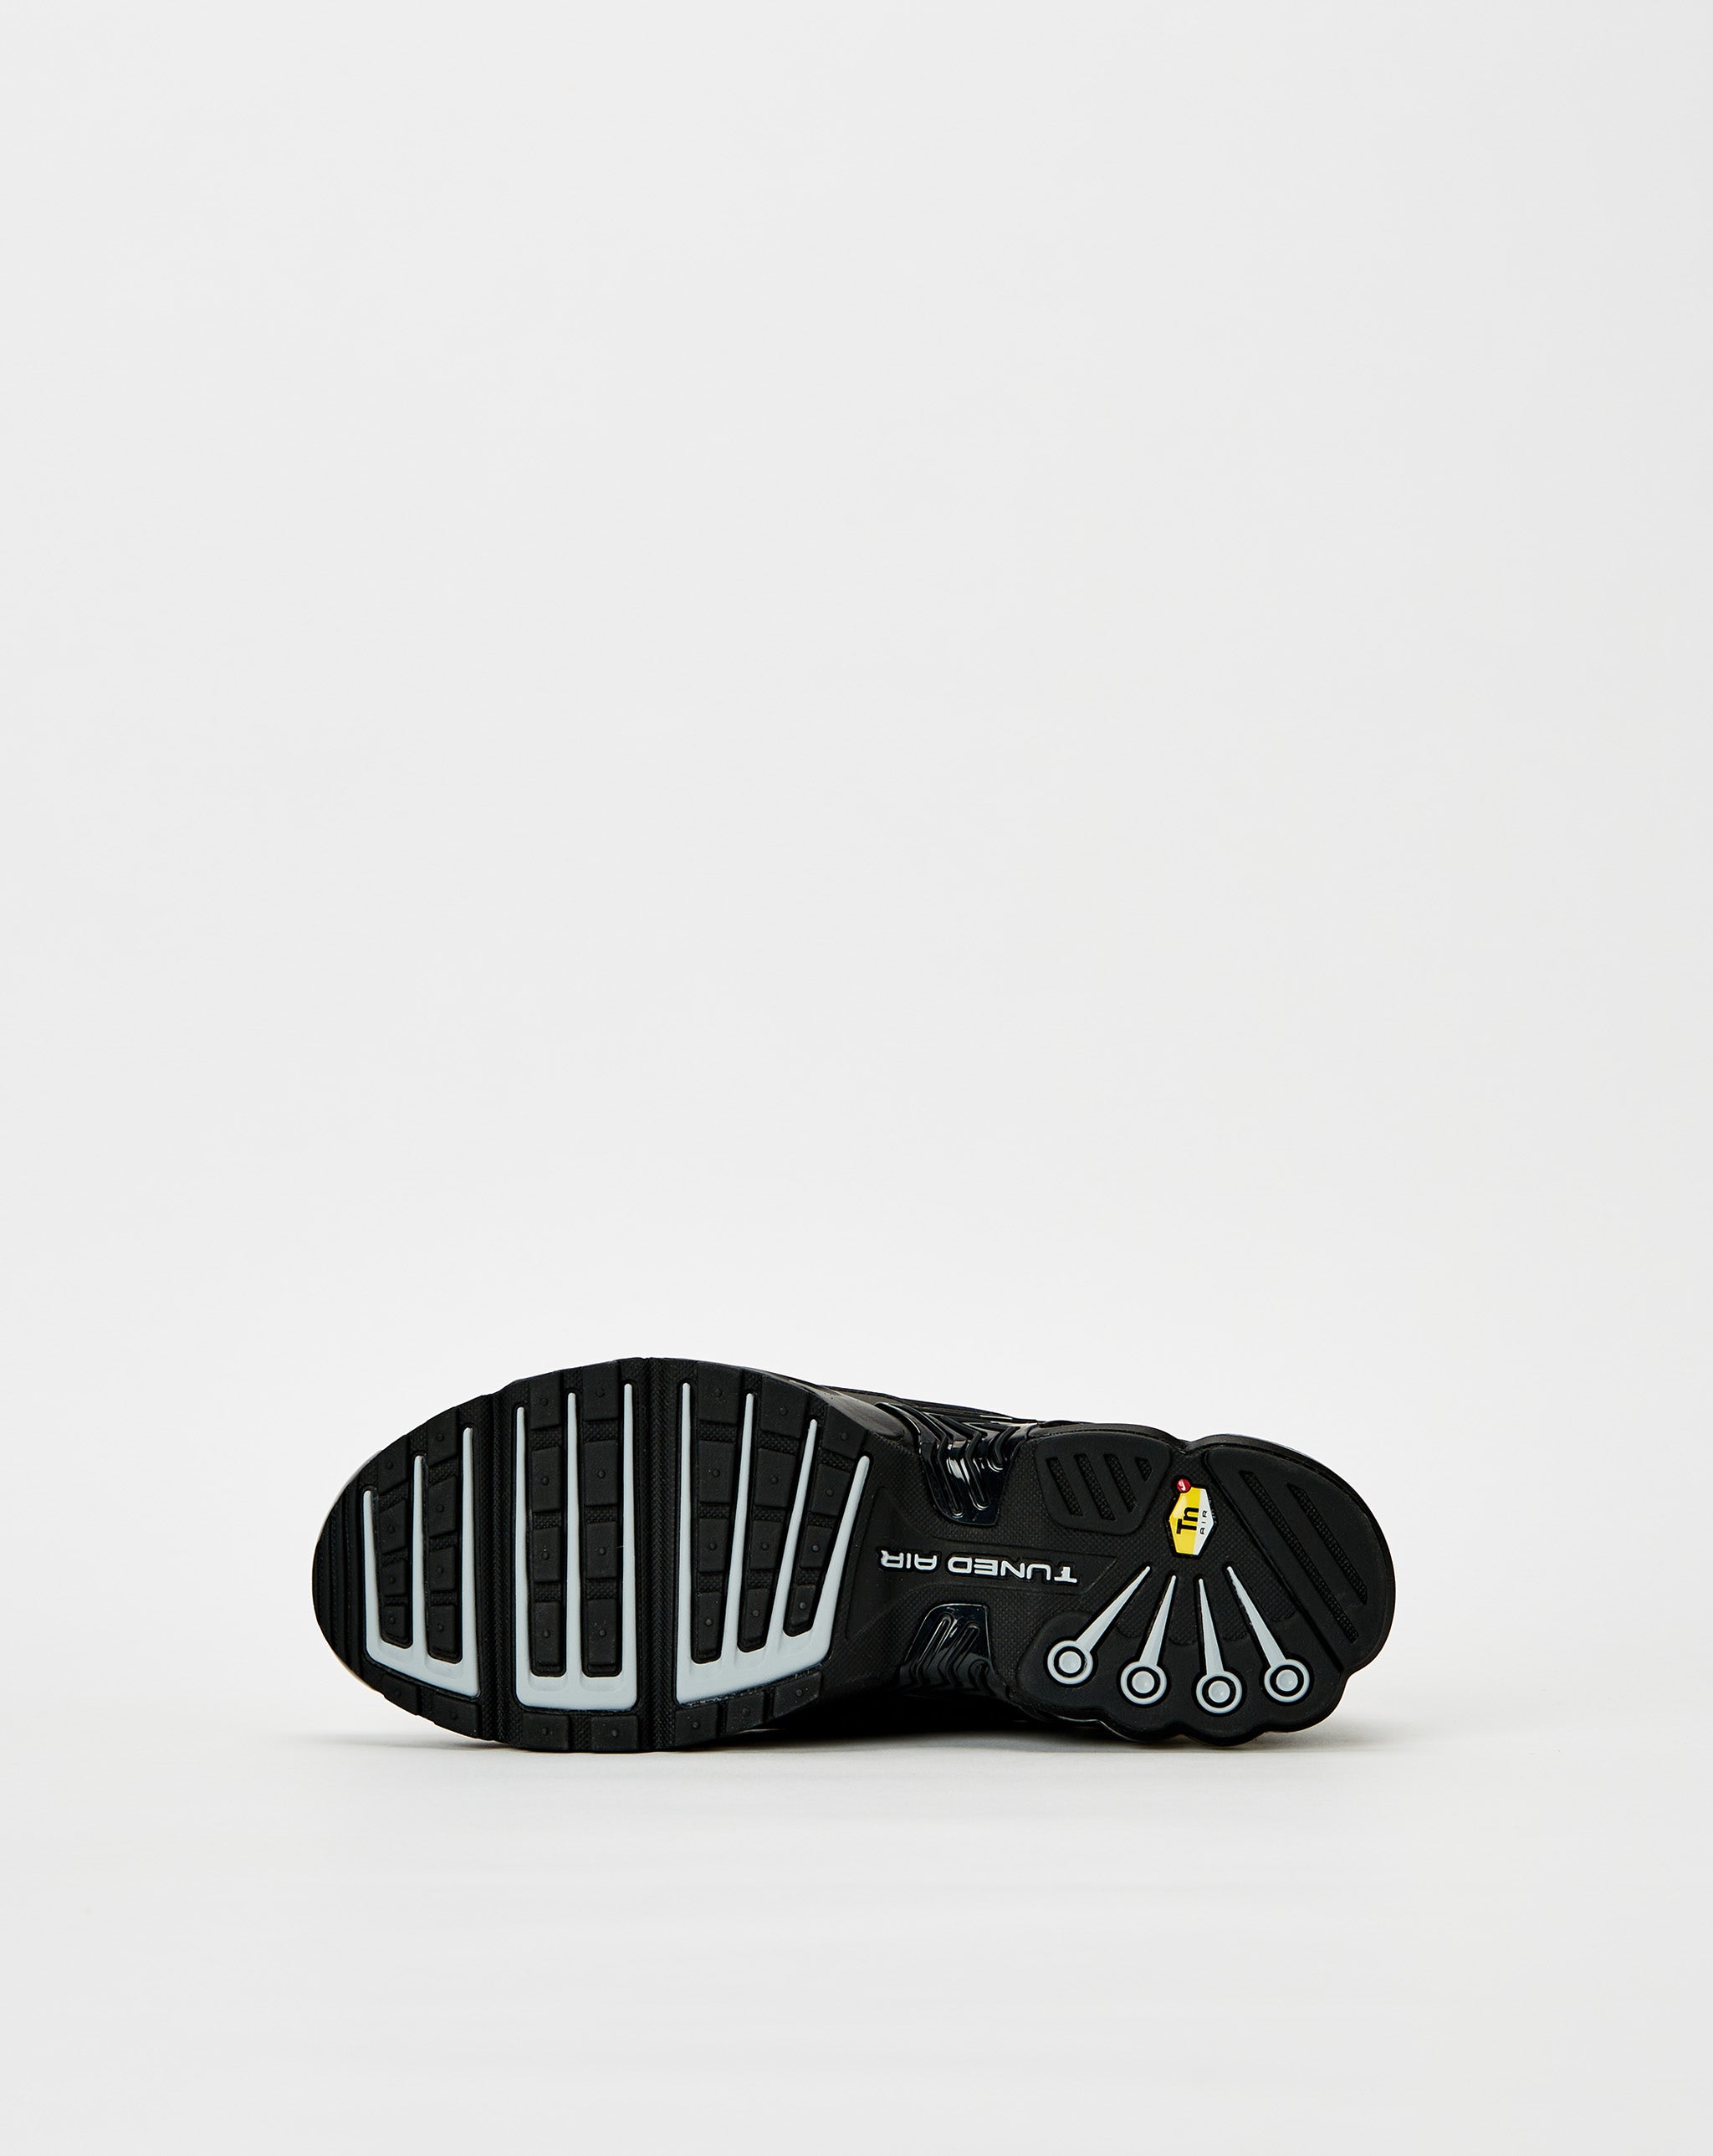 Nike nike shox turbo 2012 for sale craigslist ebay  - Cheap Urlfreeze Jordan outlet